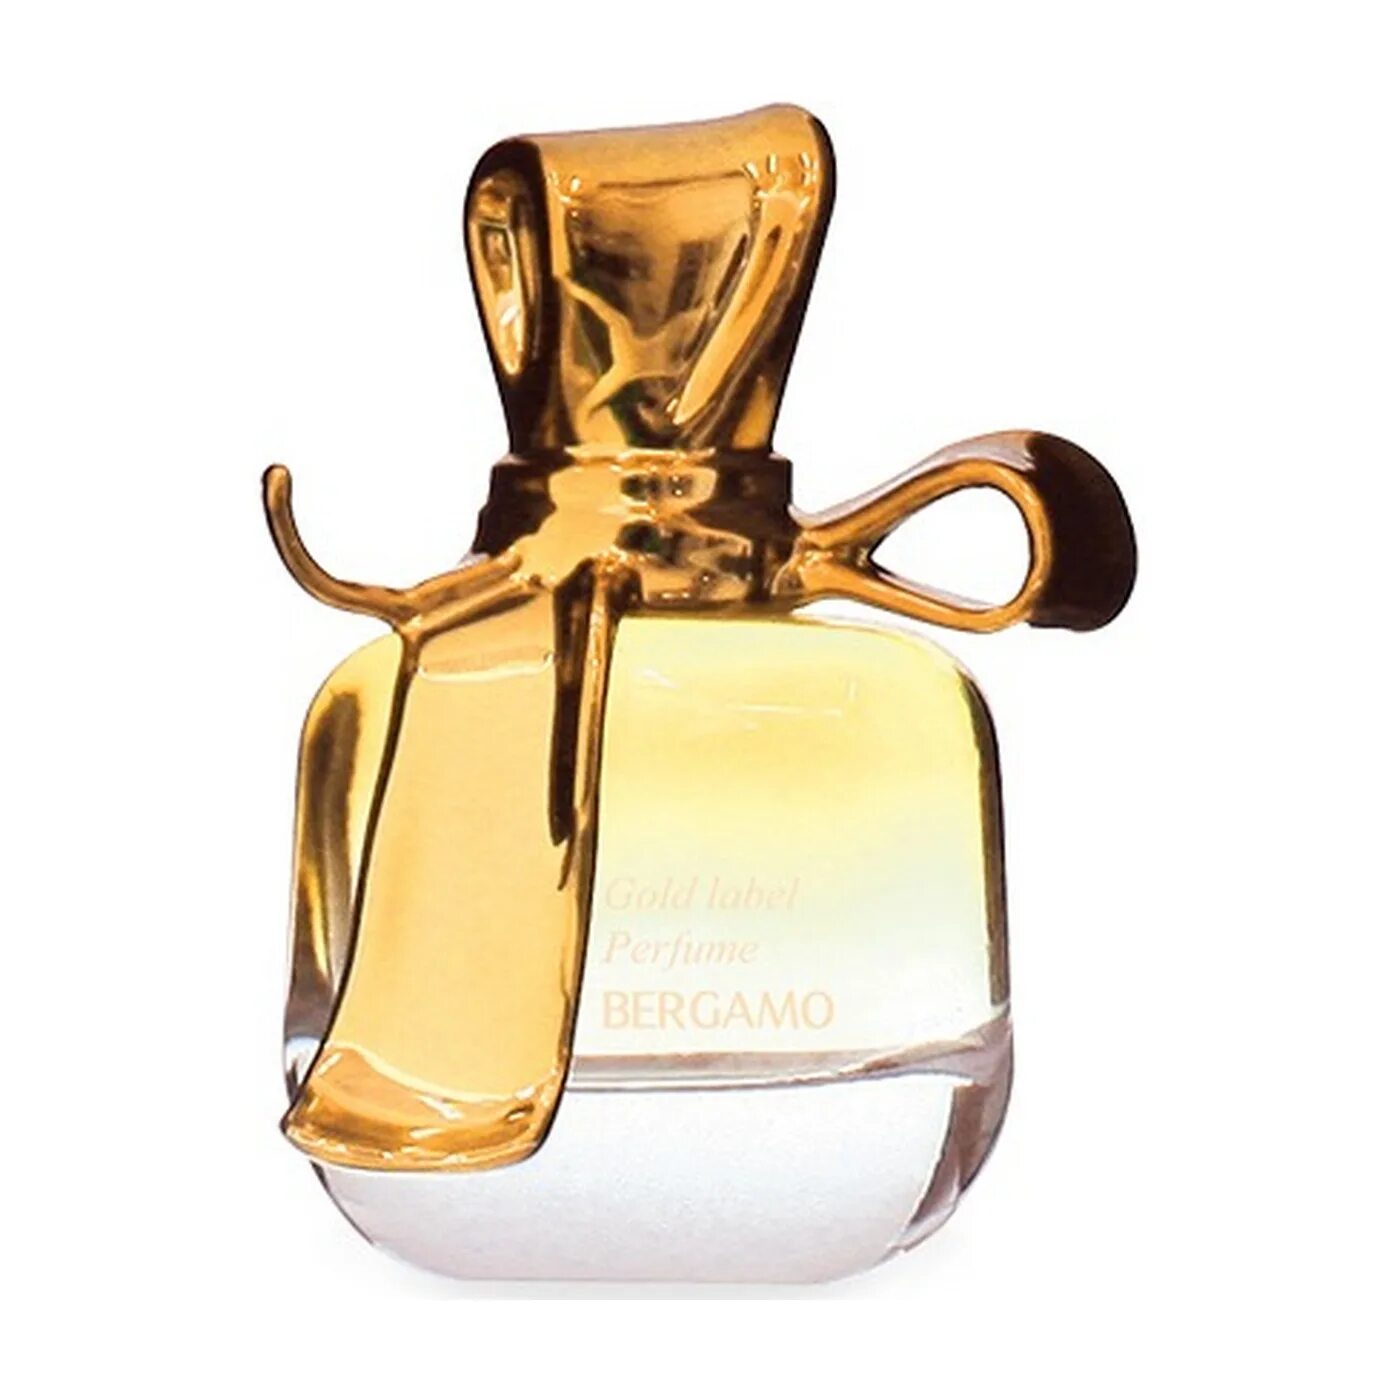 Духи Bergamo Secret Garden Perfume. Духи - [Bergamo]natural Perfume Gold. Туалетная вода Bergamo Корея. Туалетная вода Bergamo Корея naturel Perfume.